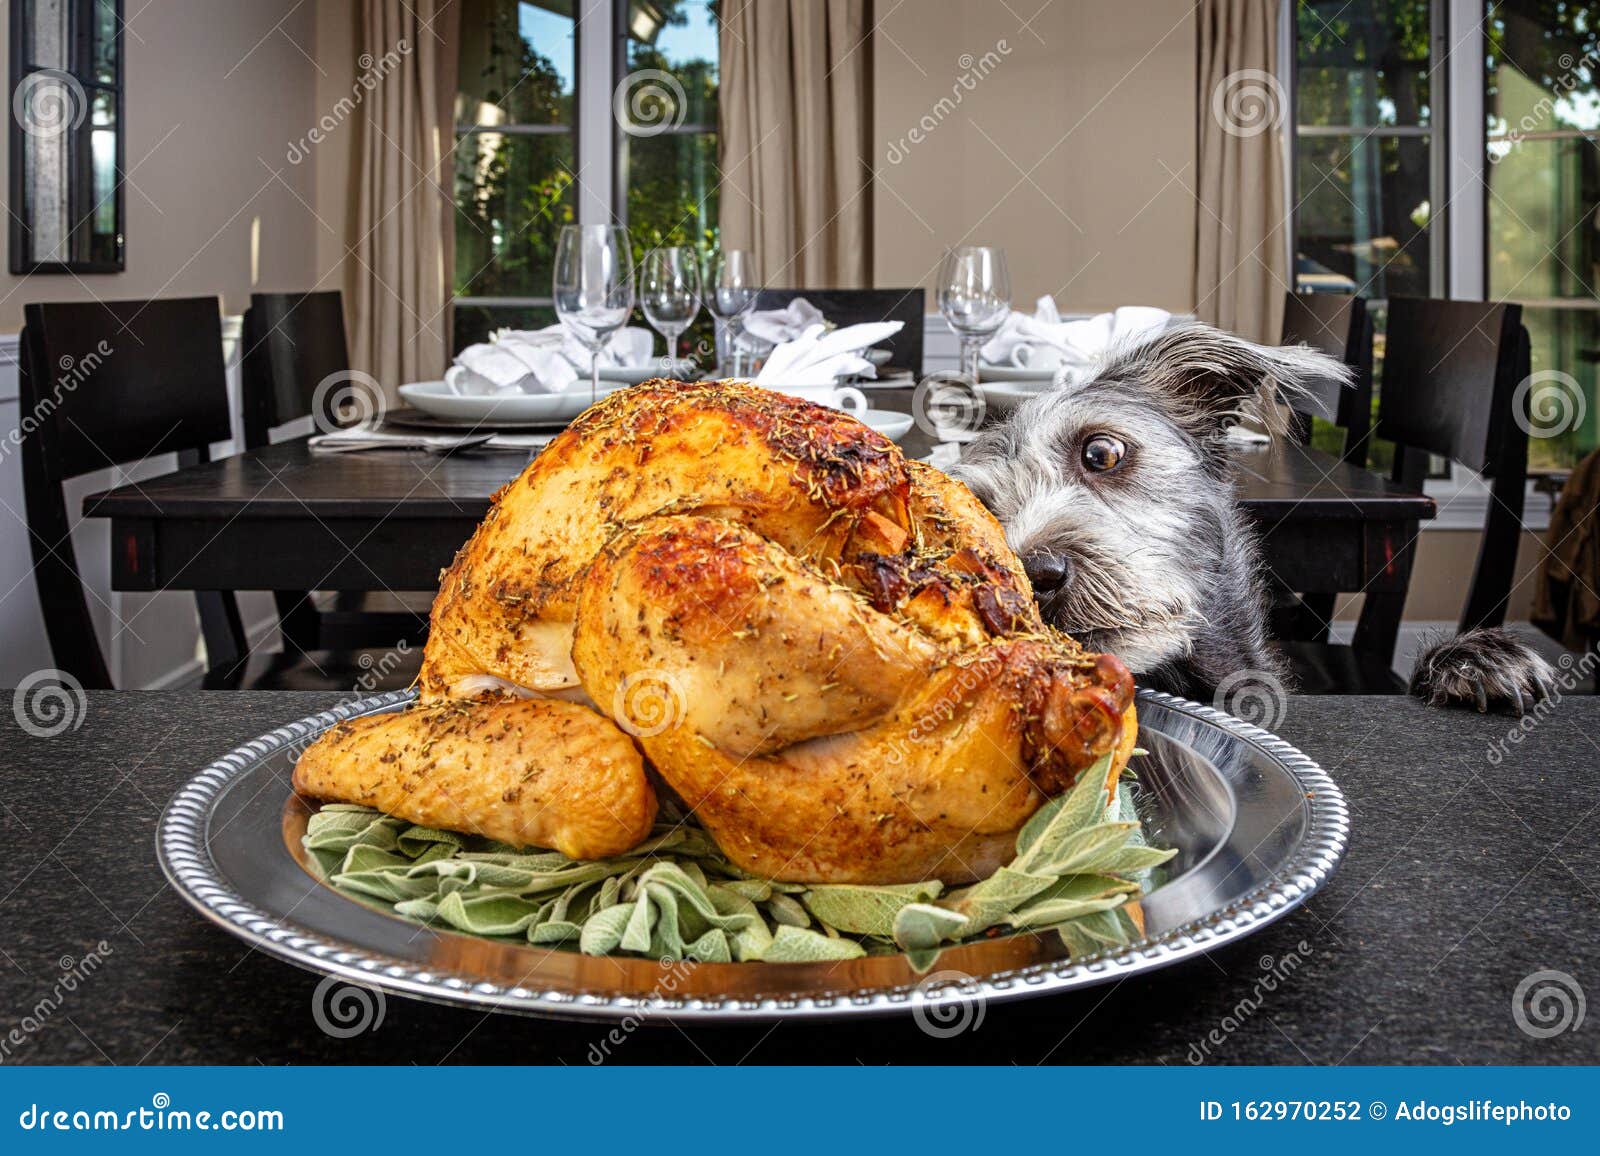 dog stealing thanksgiving turkey